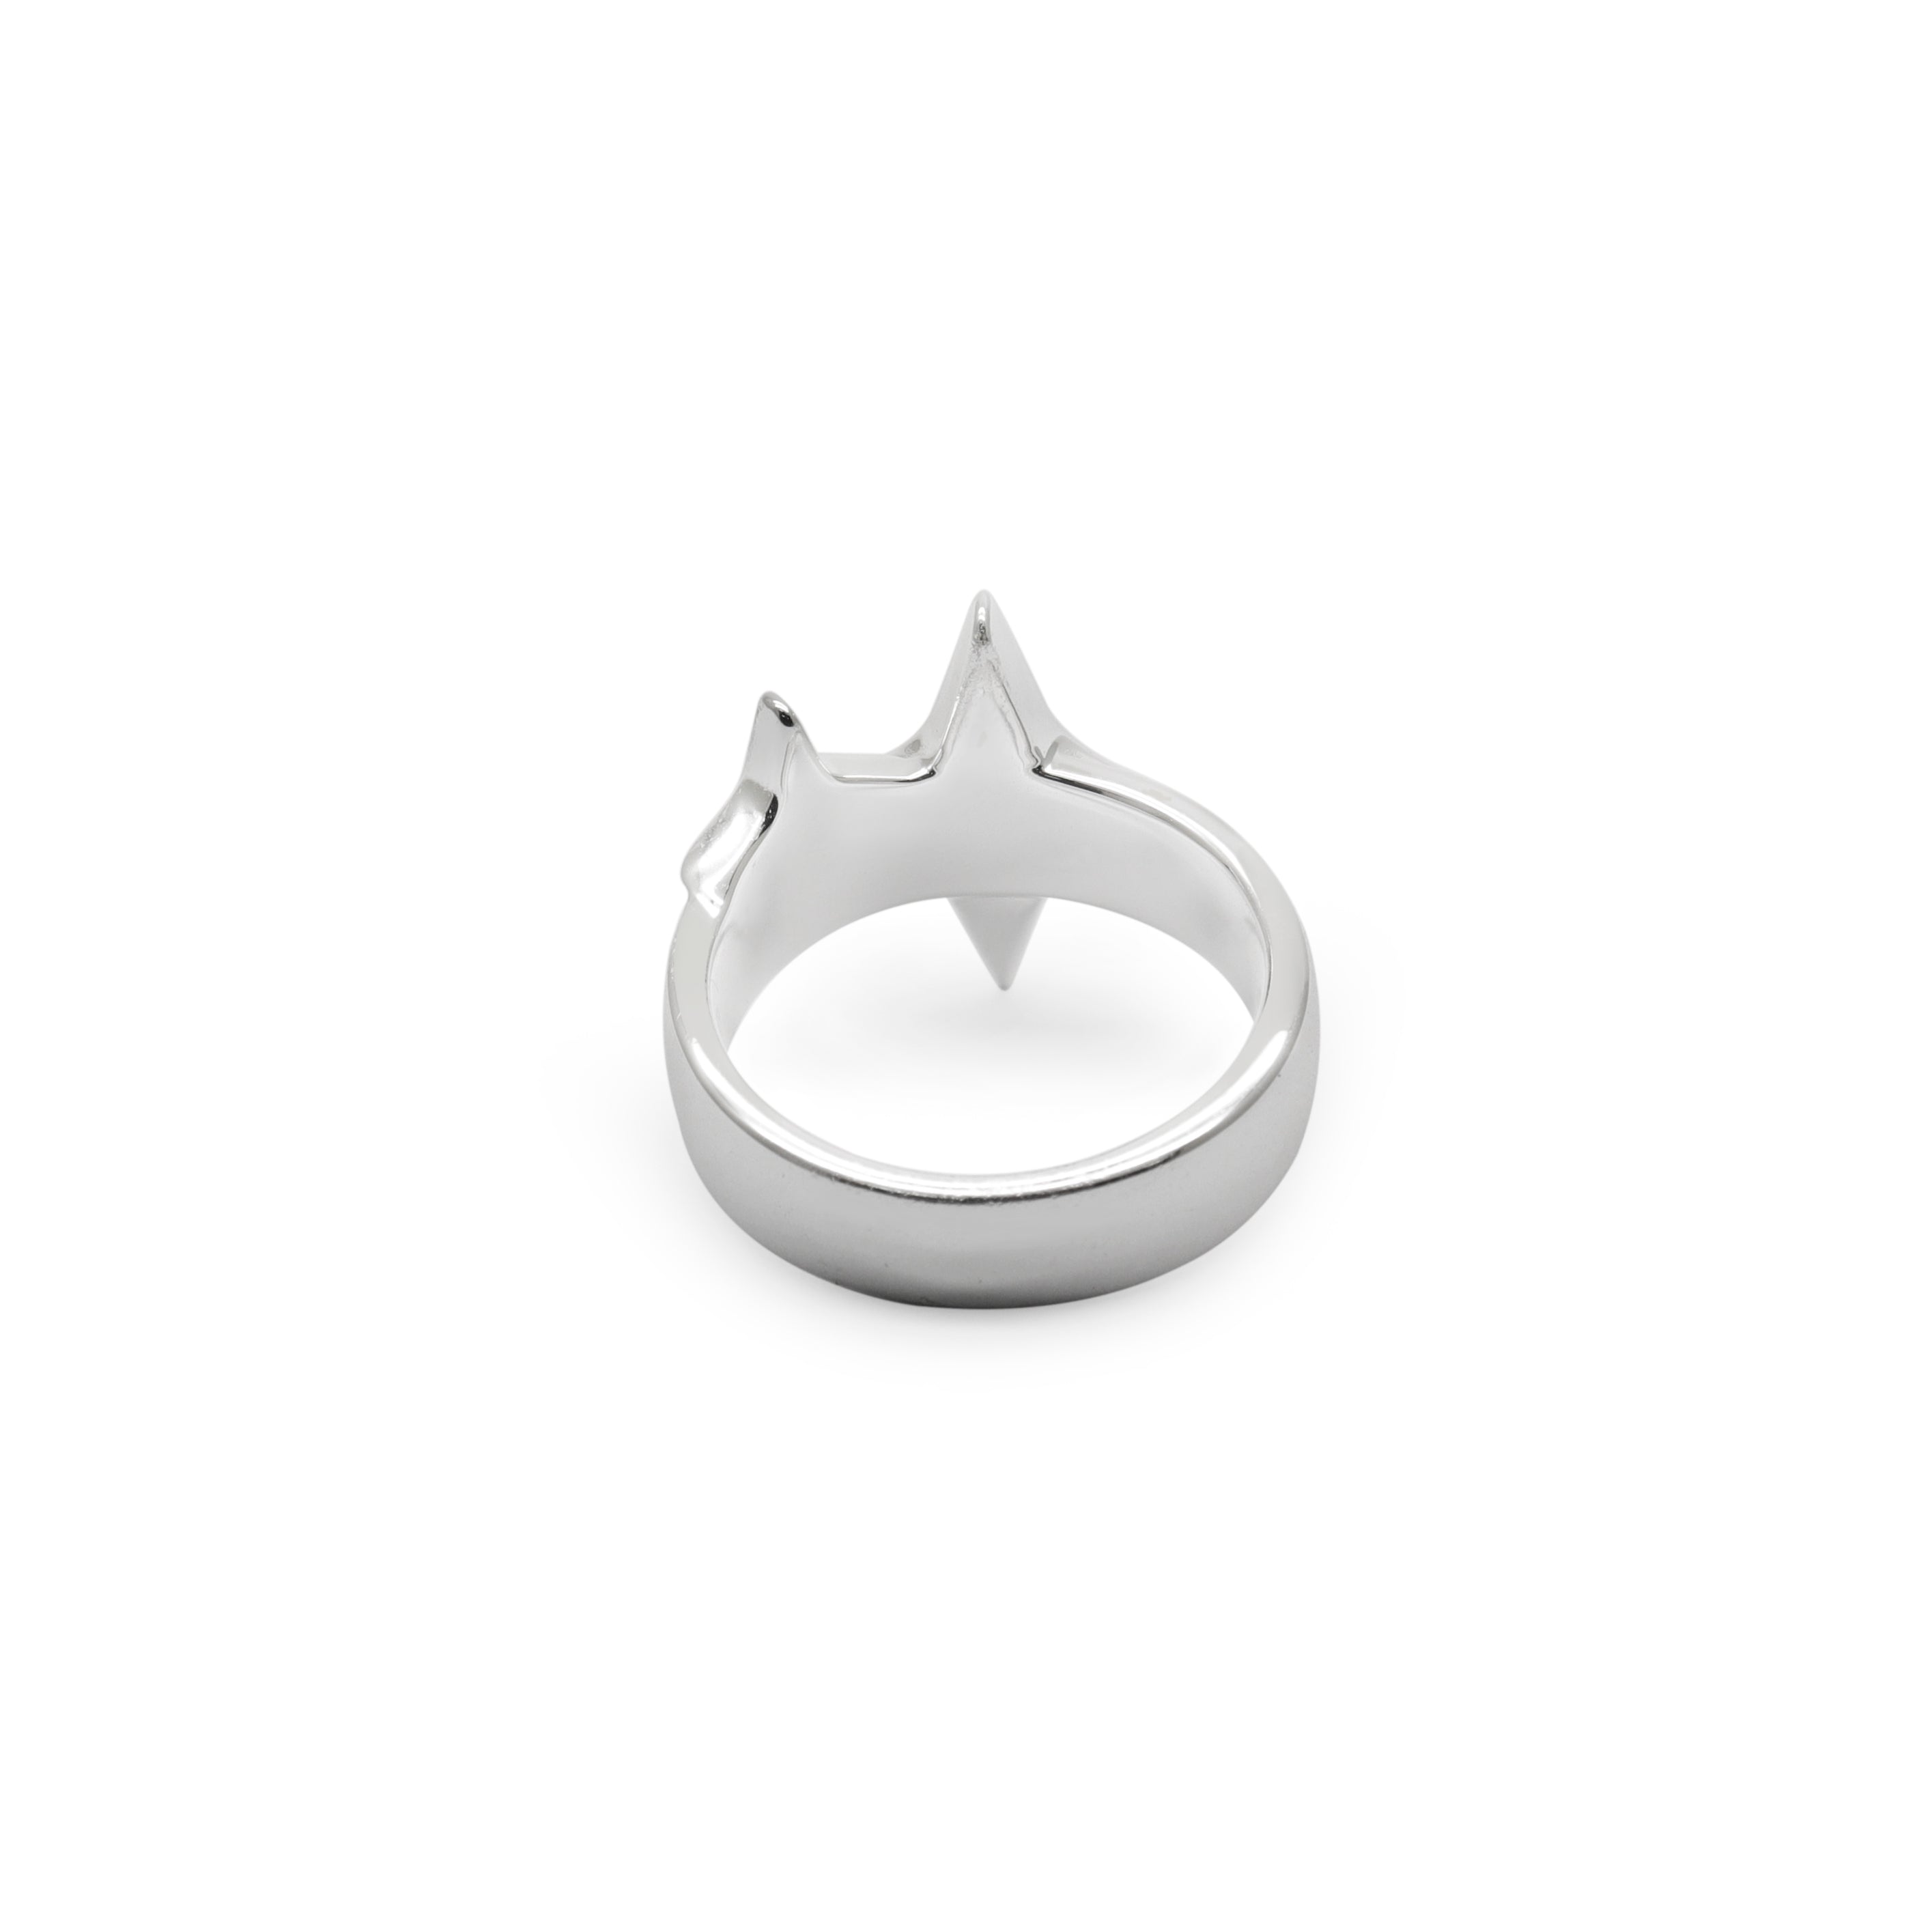 3Star Ring (925 Silver)